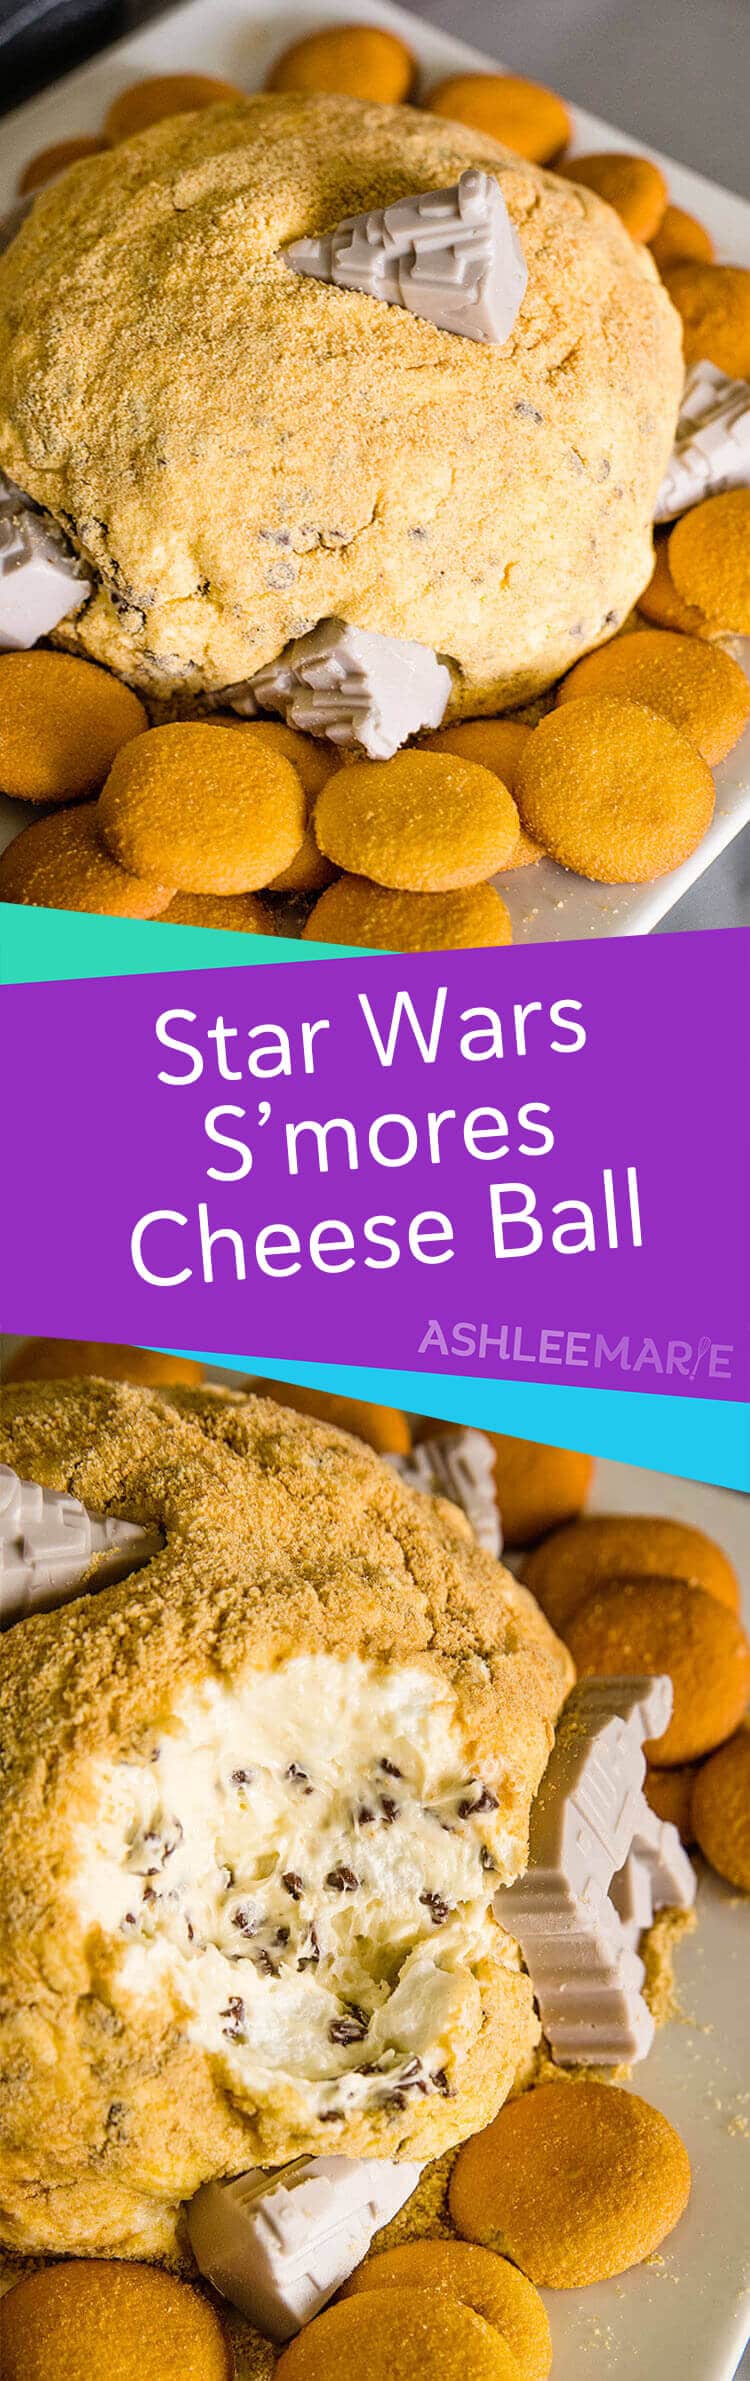 star wars jakku s'more cheeseball recipe